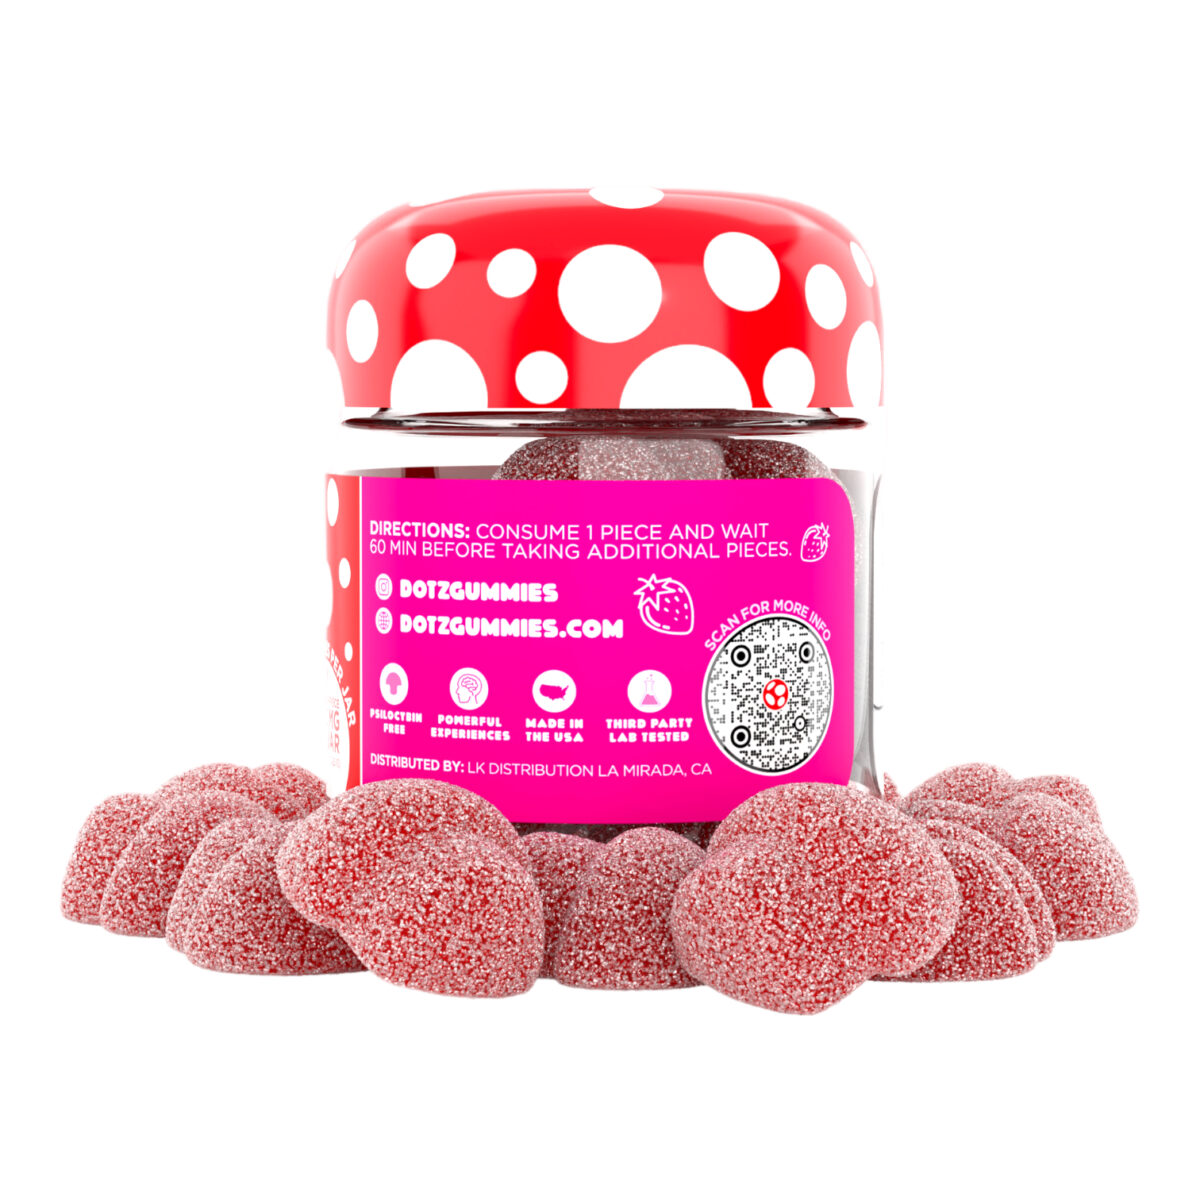 Dotz Amanita Muscaria Strawberry Gummies – 10ct